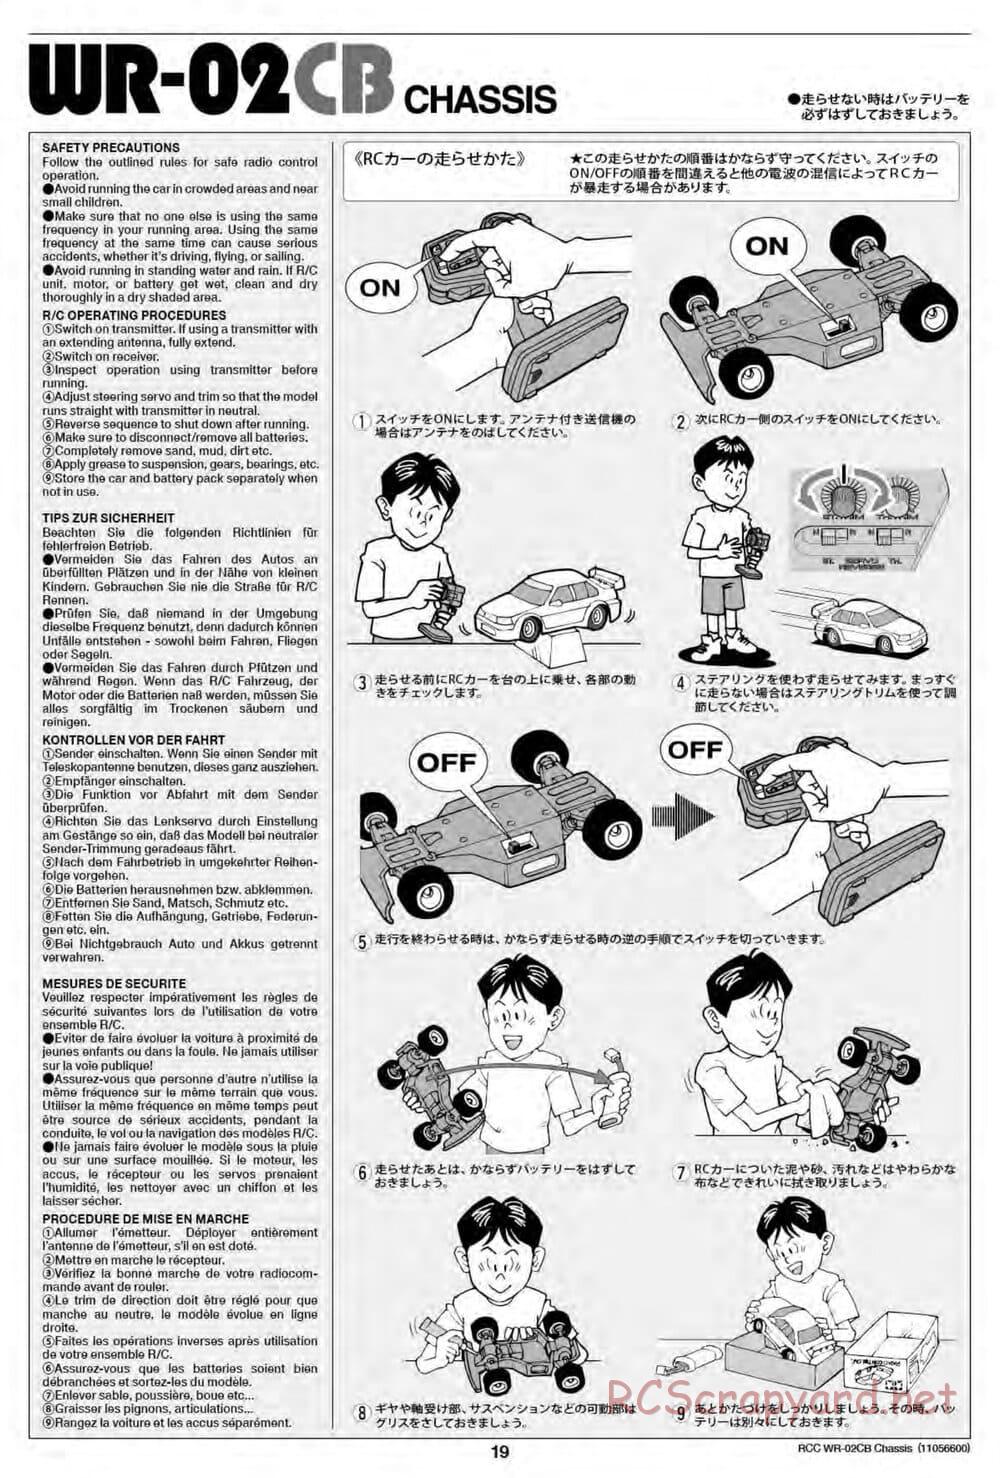 Tamiya - WR-02CB Chassis - Manual - Page 19